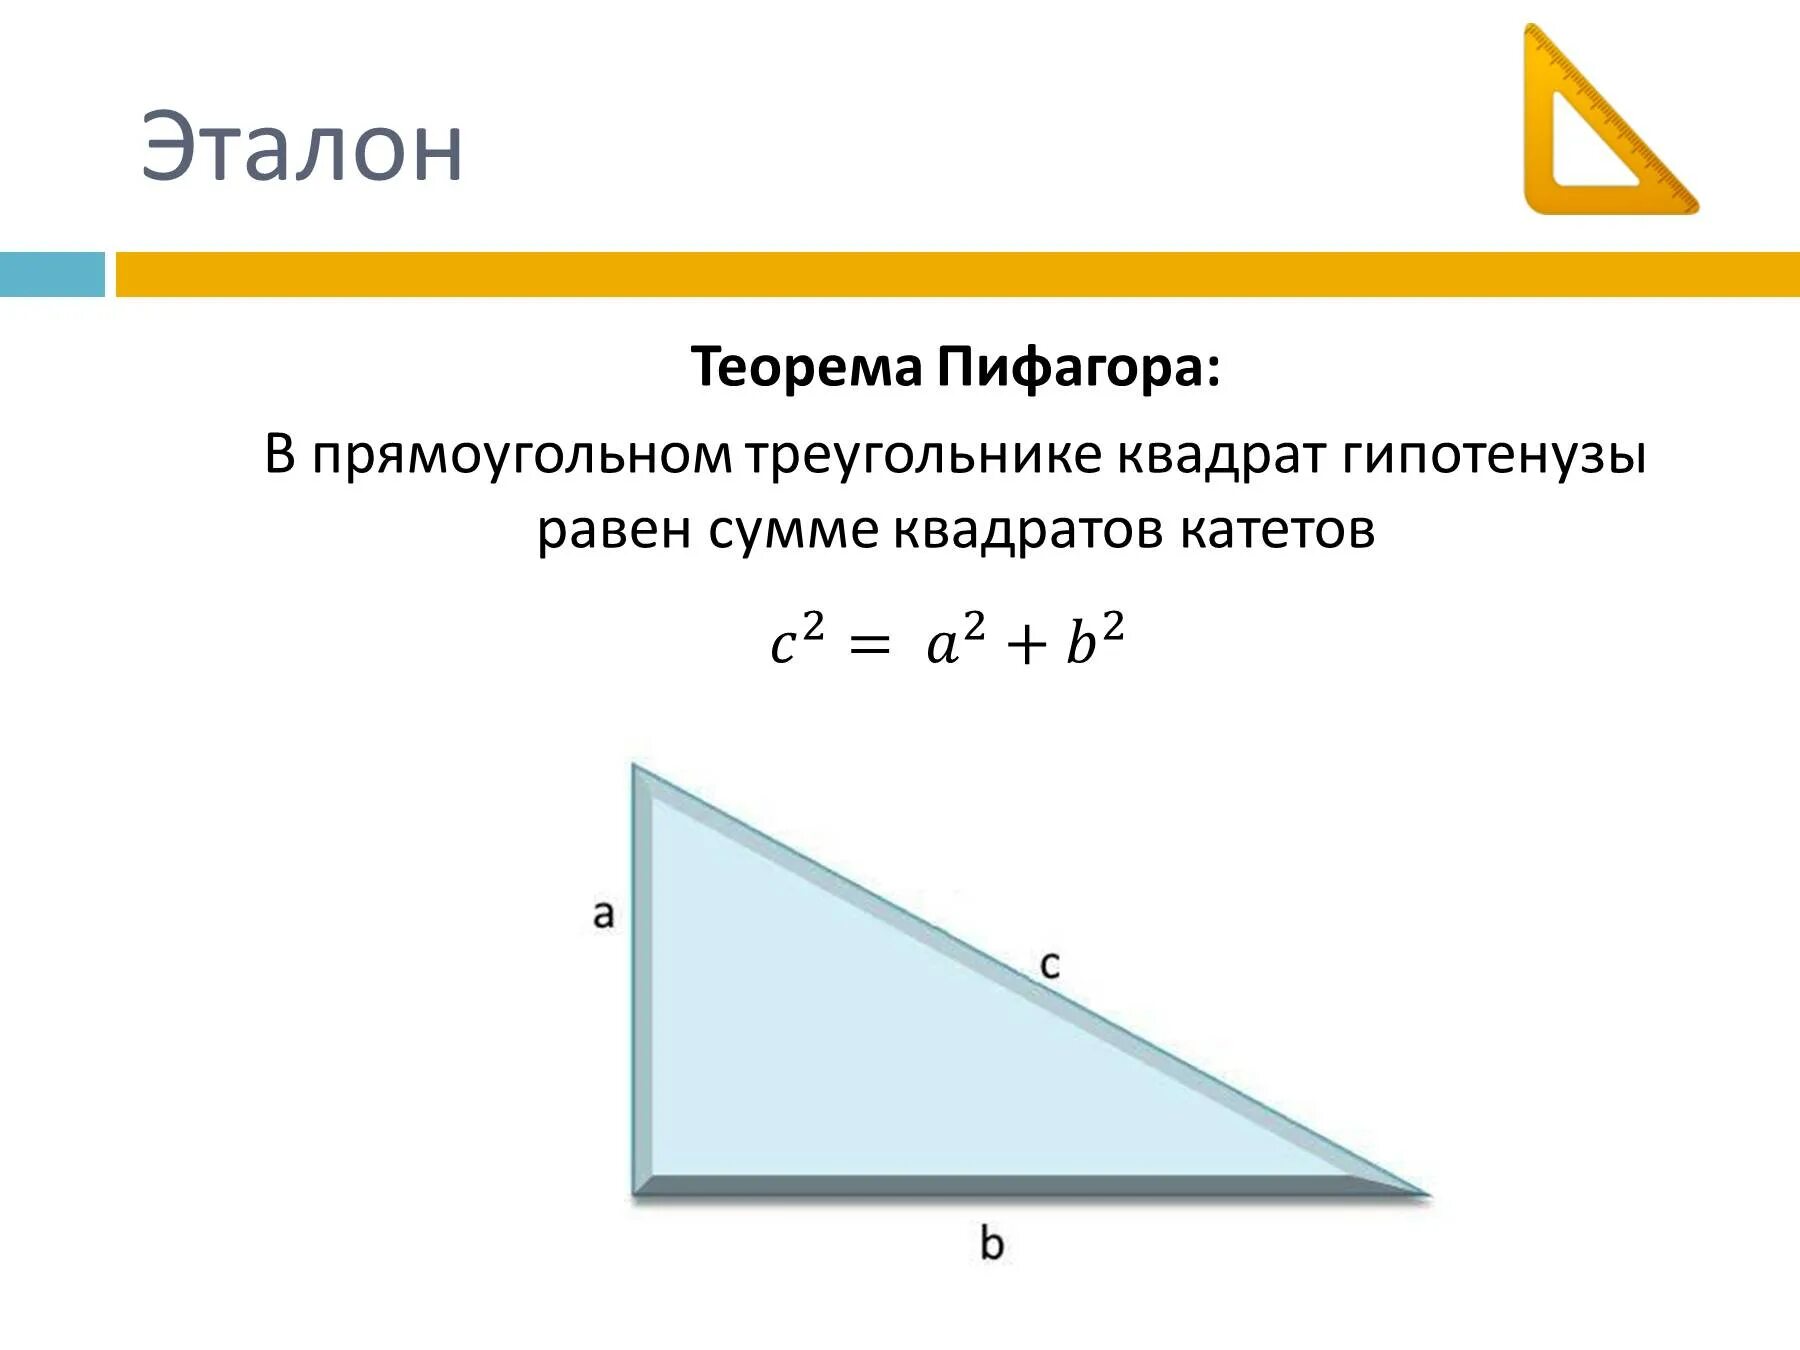 Теорема Пифагора. Теорема Пифагора треугольник. Теорема Пифагора для прямоугольного треугольника. Квадрат гипотенузы равен.